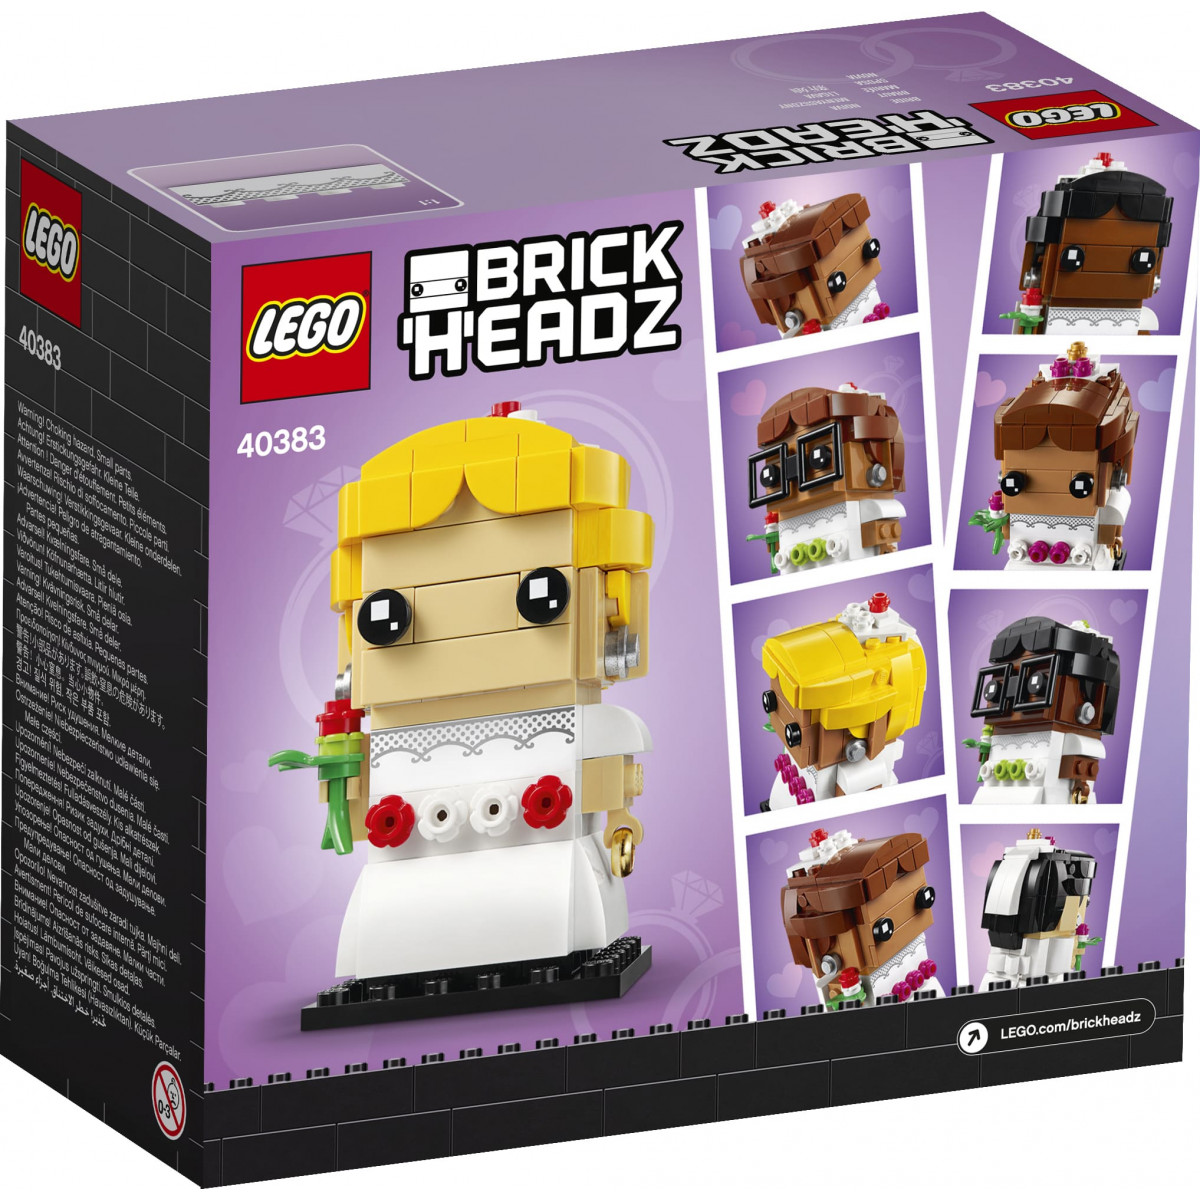 LEGO BrickHeadz Wedding Bride - 40383